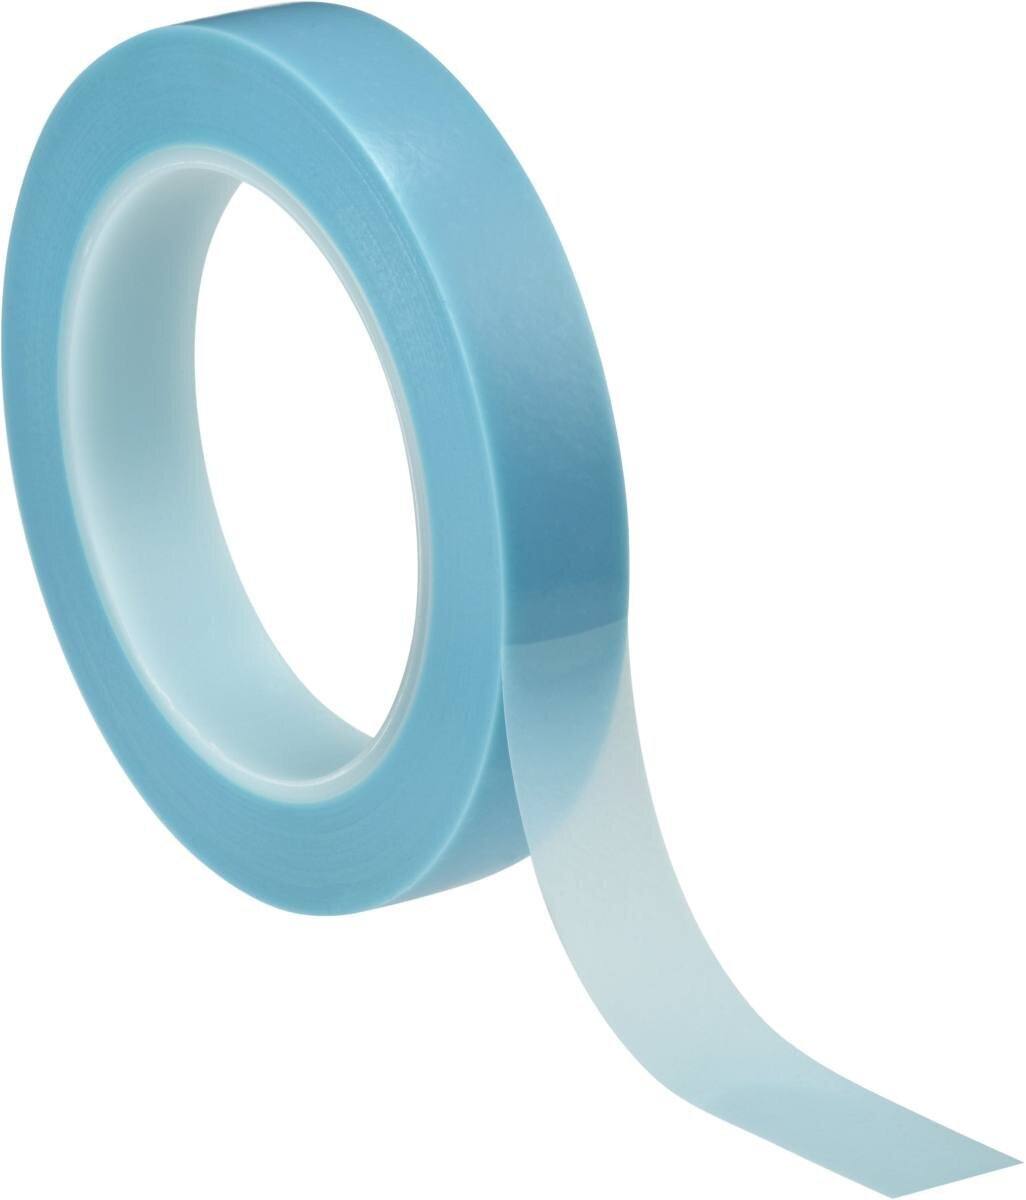 3M Scotch Hochtemperatur-Farblinienband 4737 T, Blau, transparent, 50 mm x 33 m, 0,13 mm